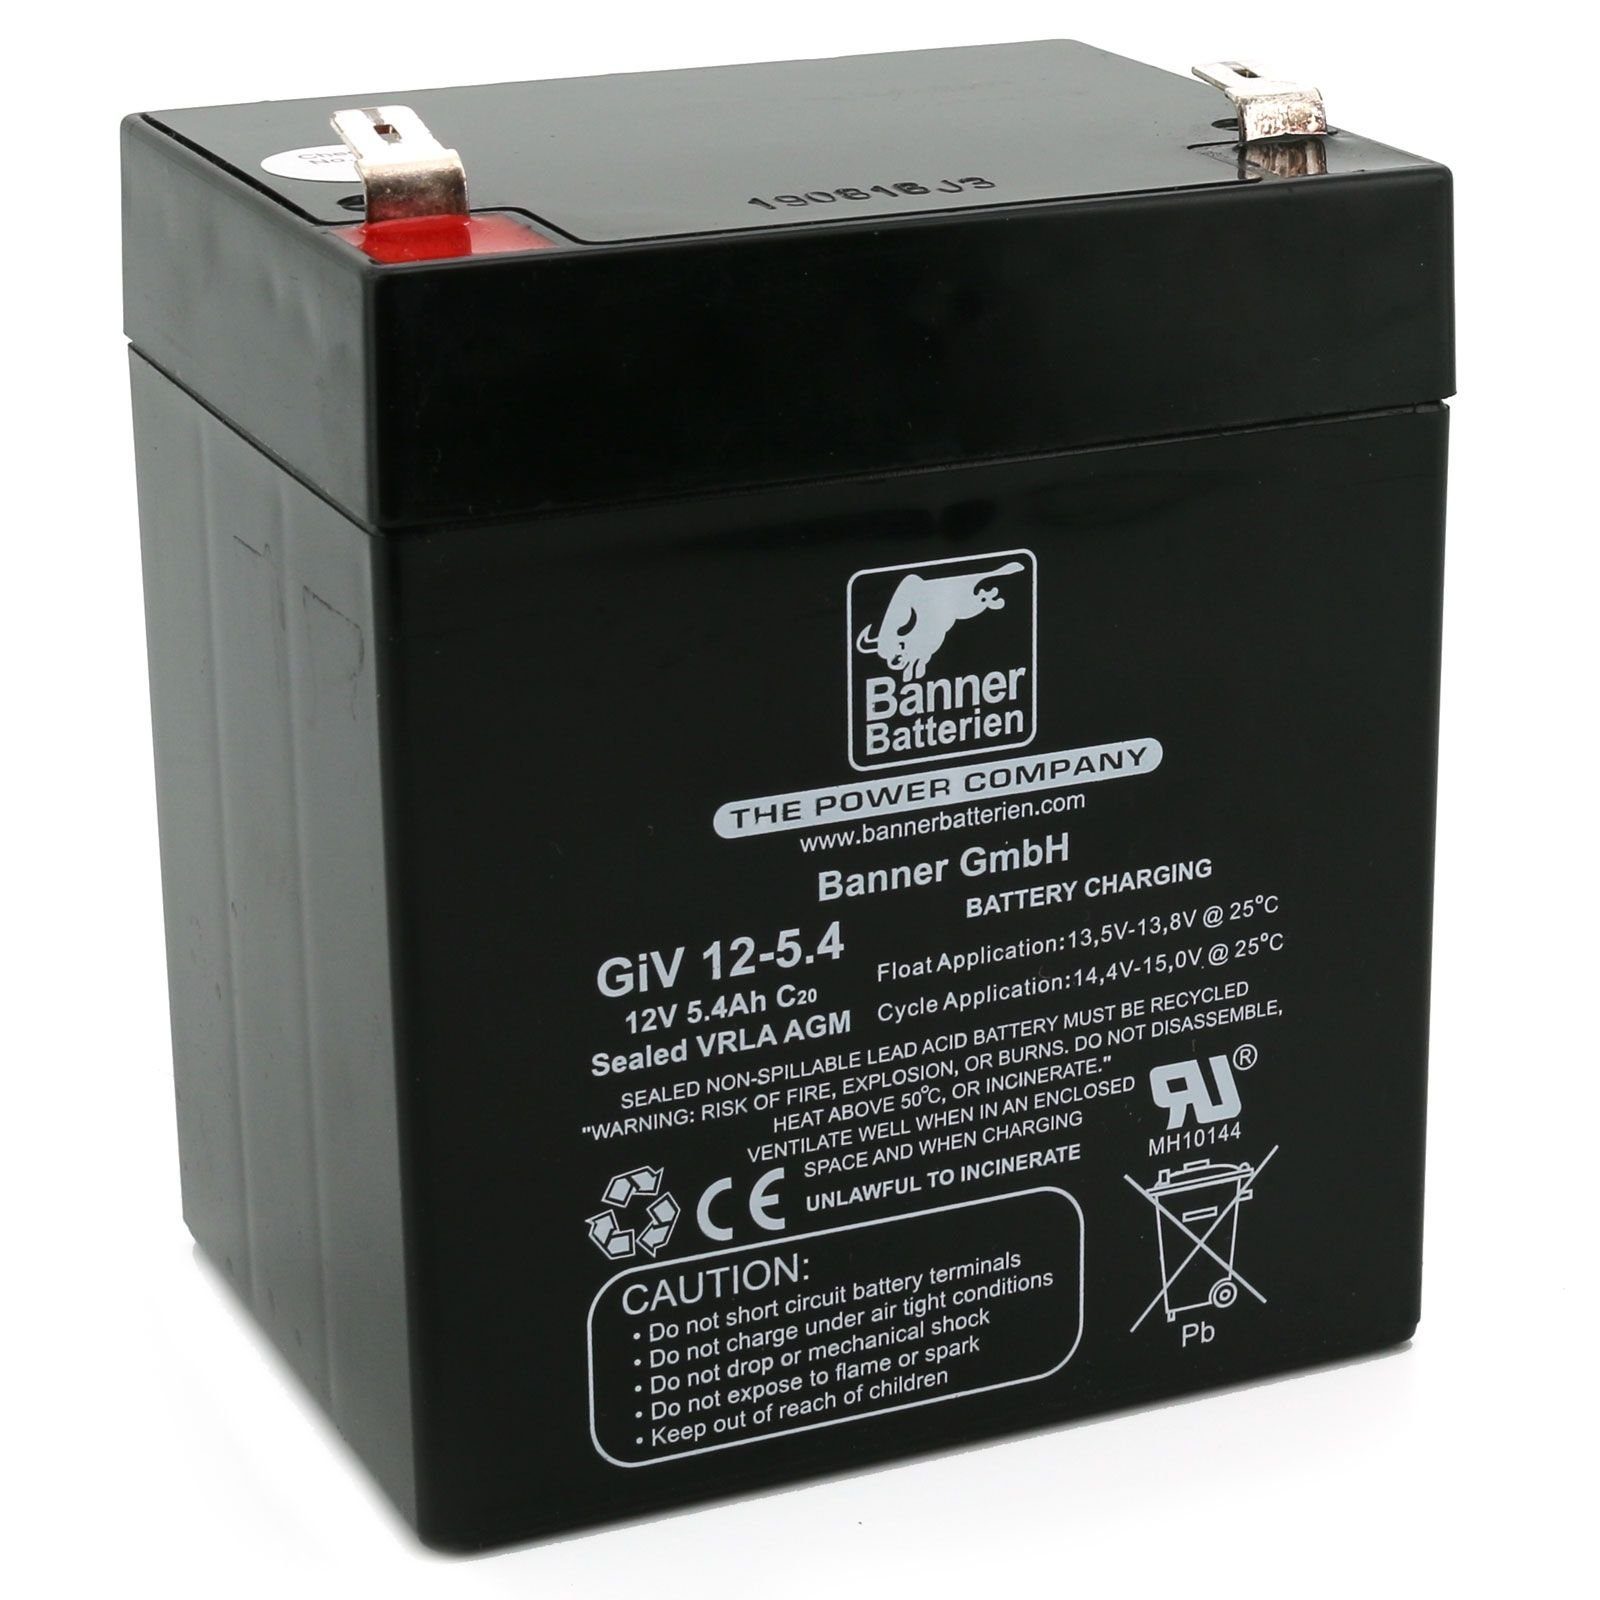 Banner Batterien Batterie Stand by Bull 12 Volt 5,4 Ah GIV 12-5.4 Batterie, 12 Volt 5,4 Ah GIV 12-5.4